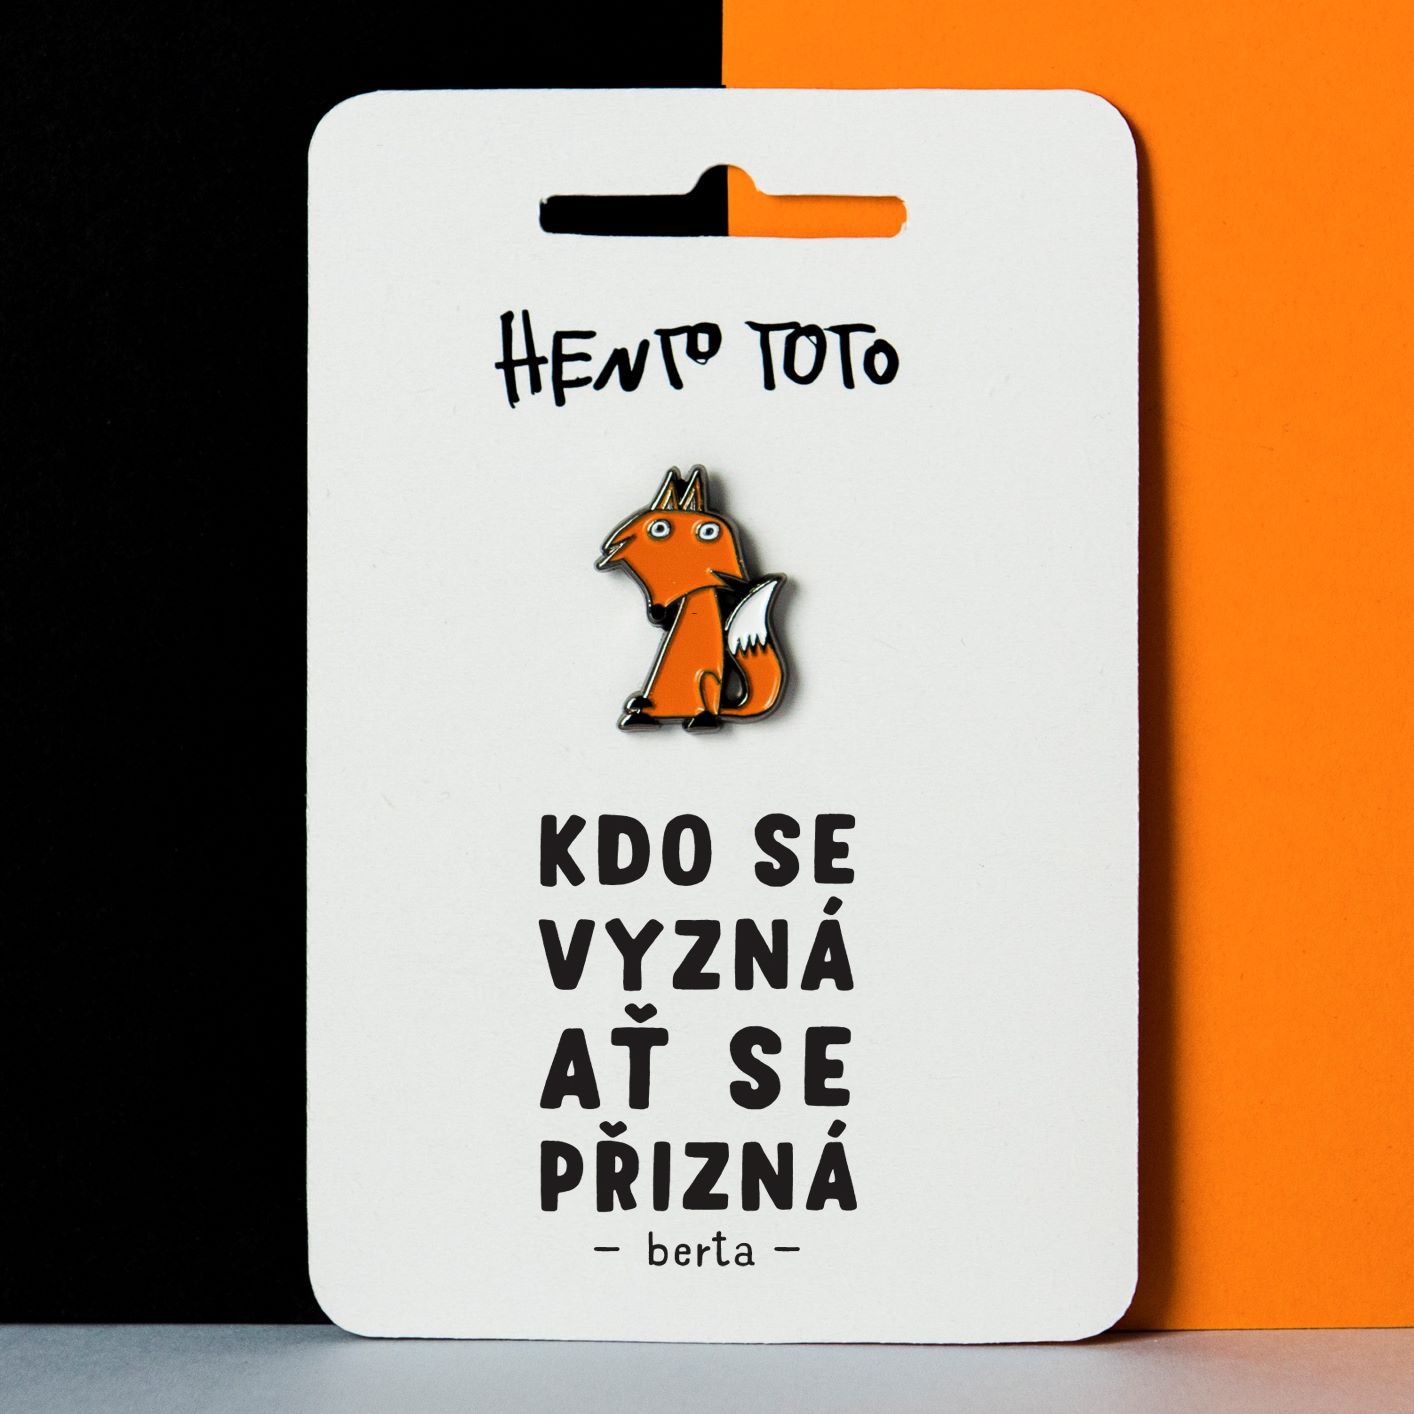 Odznak/Pin Hento Toto Berta liška